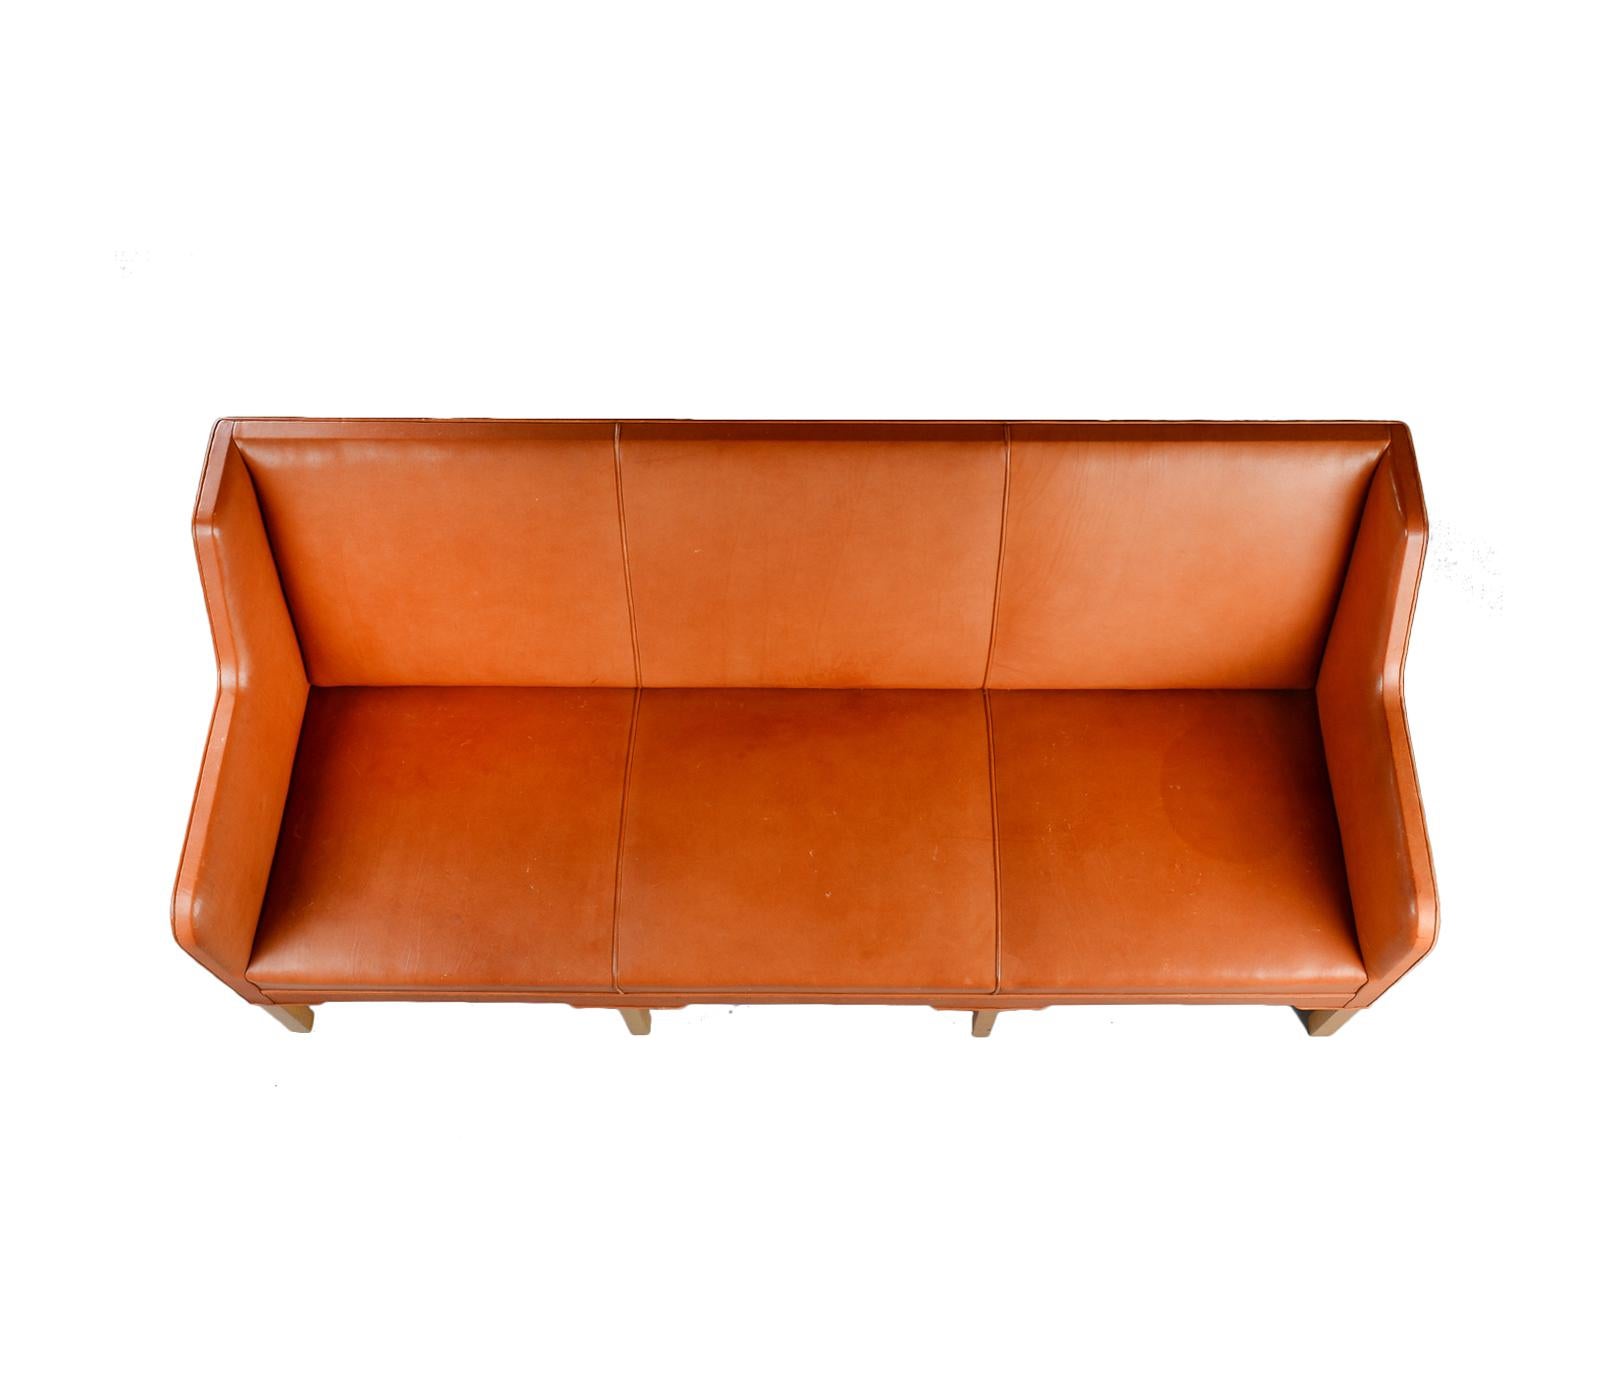 Late 20th Century Kaare Klint Sofa Model 5011 Original Cognac Leather for Rud Rasmussen Denmark For Sale